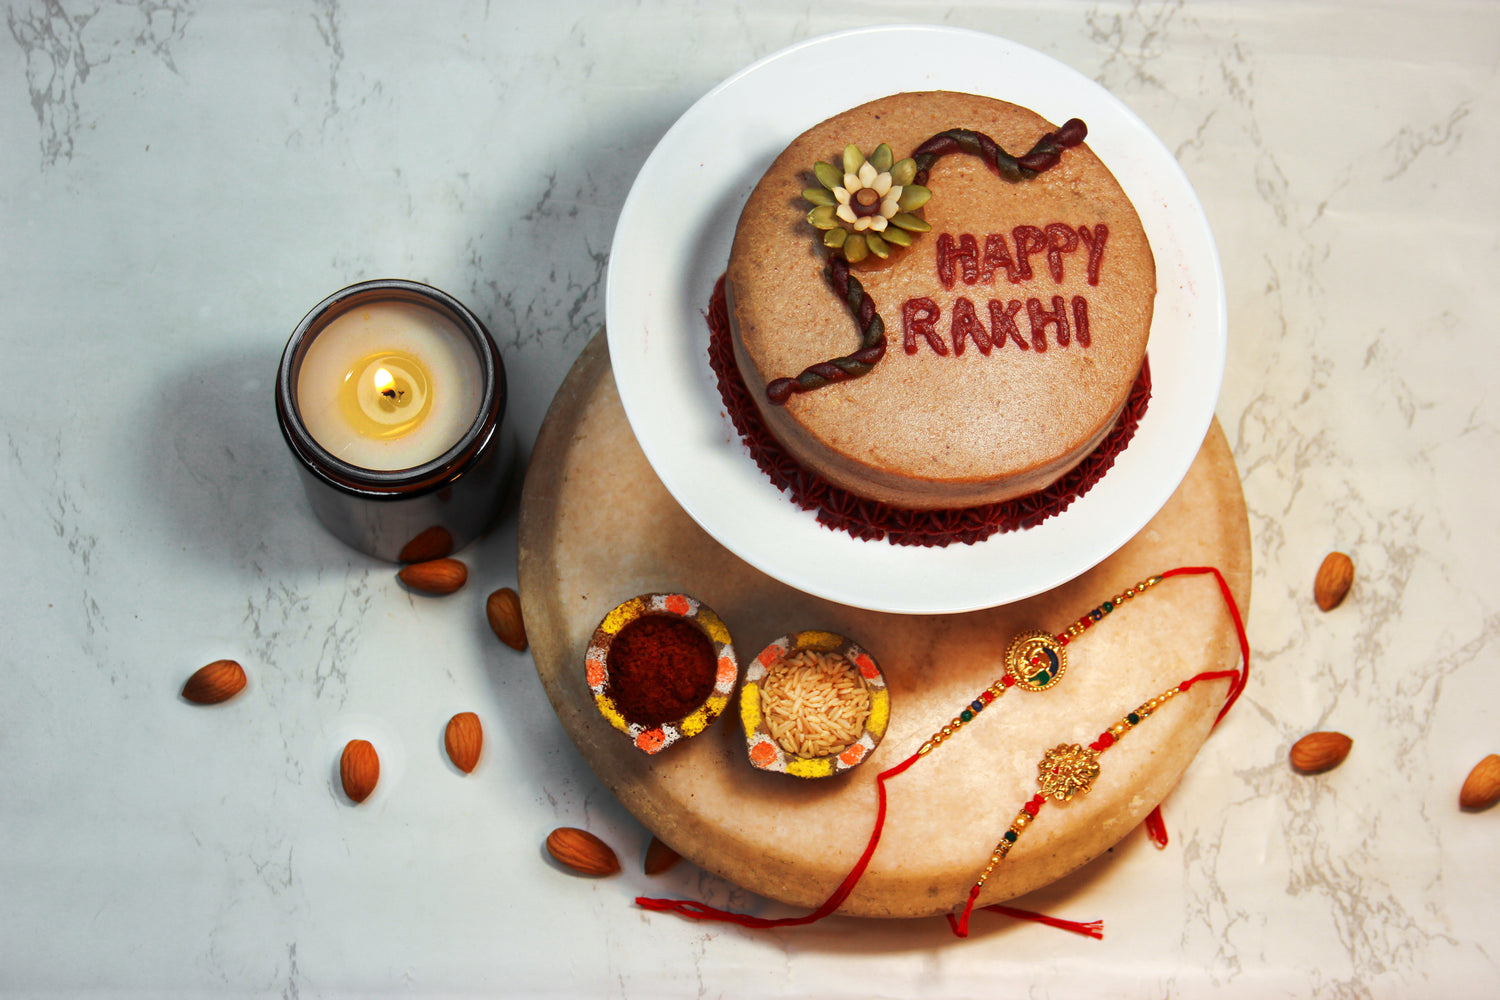 Rakhi With Cakes | Send Rakhi With Cake Online In India - FNP